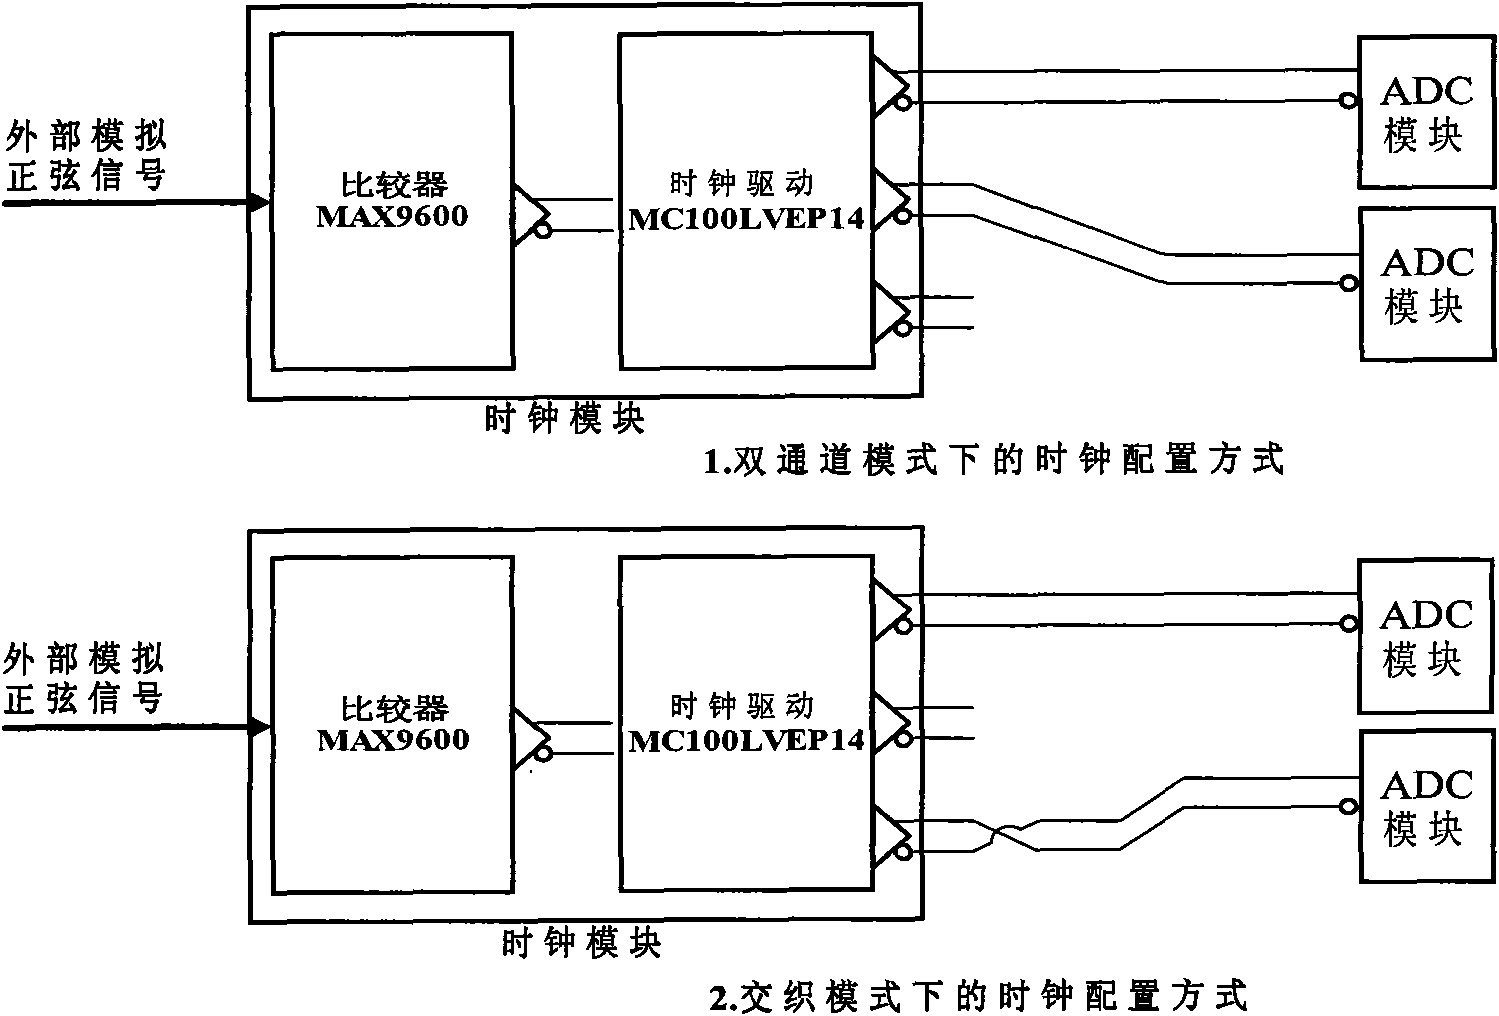 Dual-mode signal acquiring board